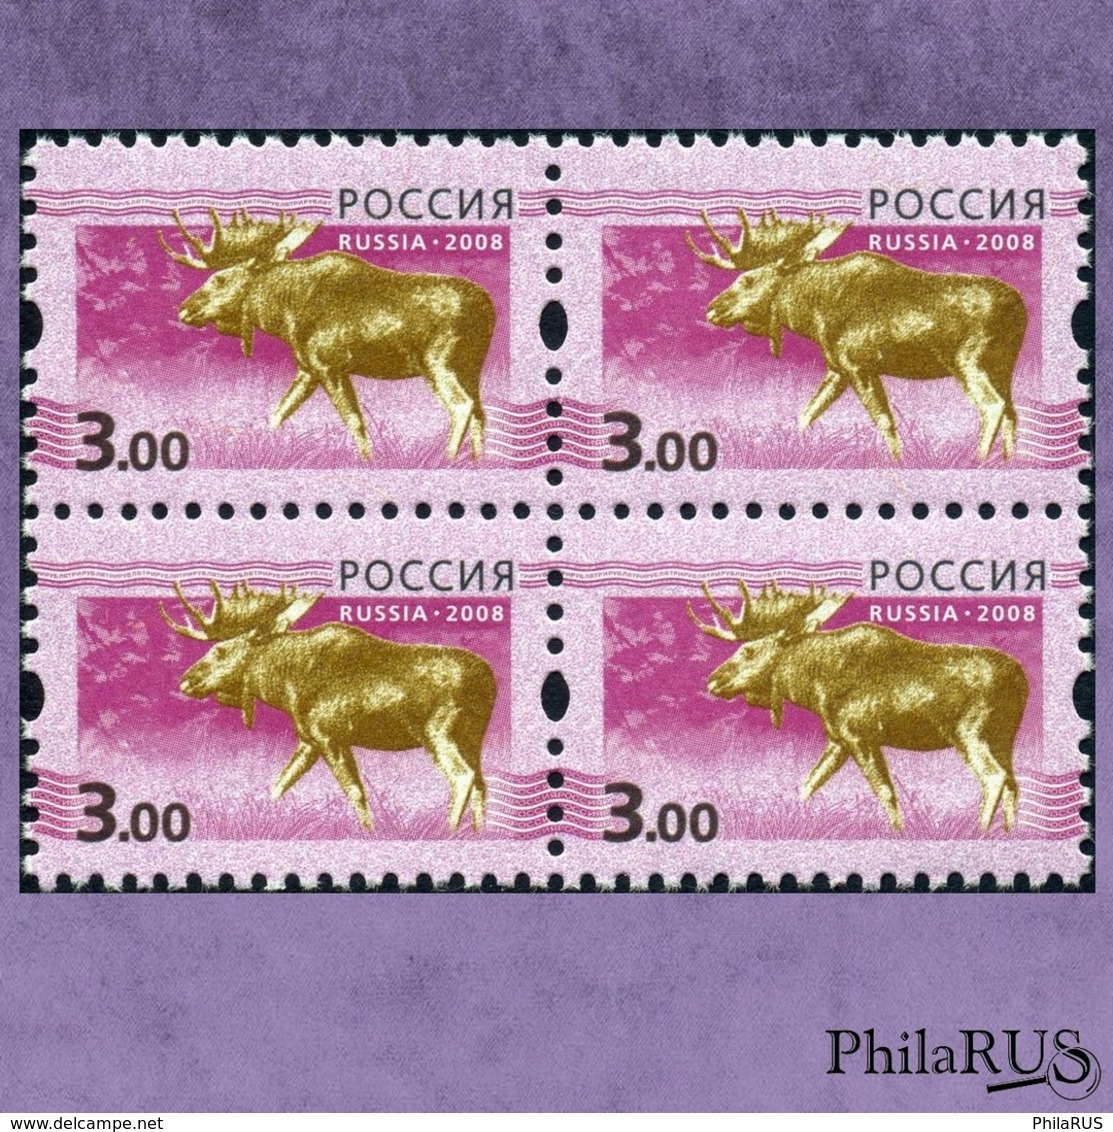 RARE! RUSSIA 2008(2010?) Mi.1491 5th Definitive Issue Fauna Elk 3-00 ERROR! -> Without Protect Line / Bl. Of 4 - Variétés & Curiosités